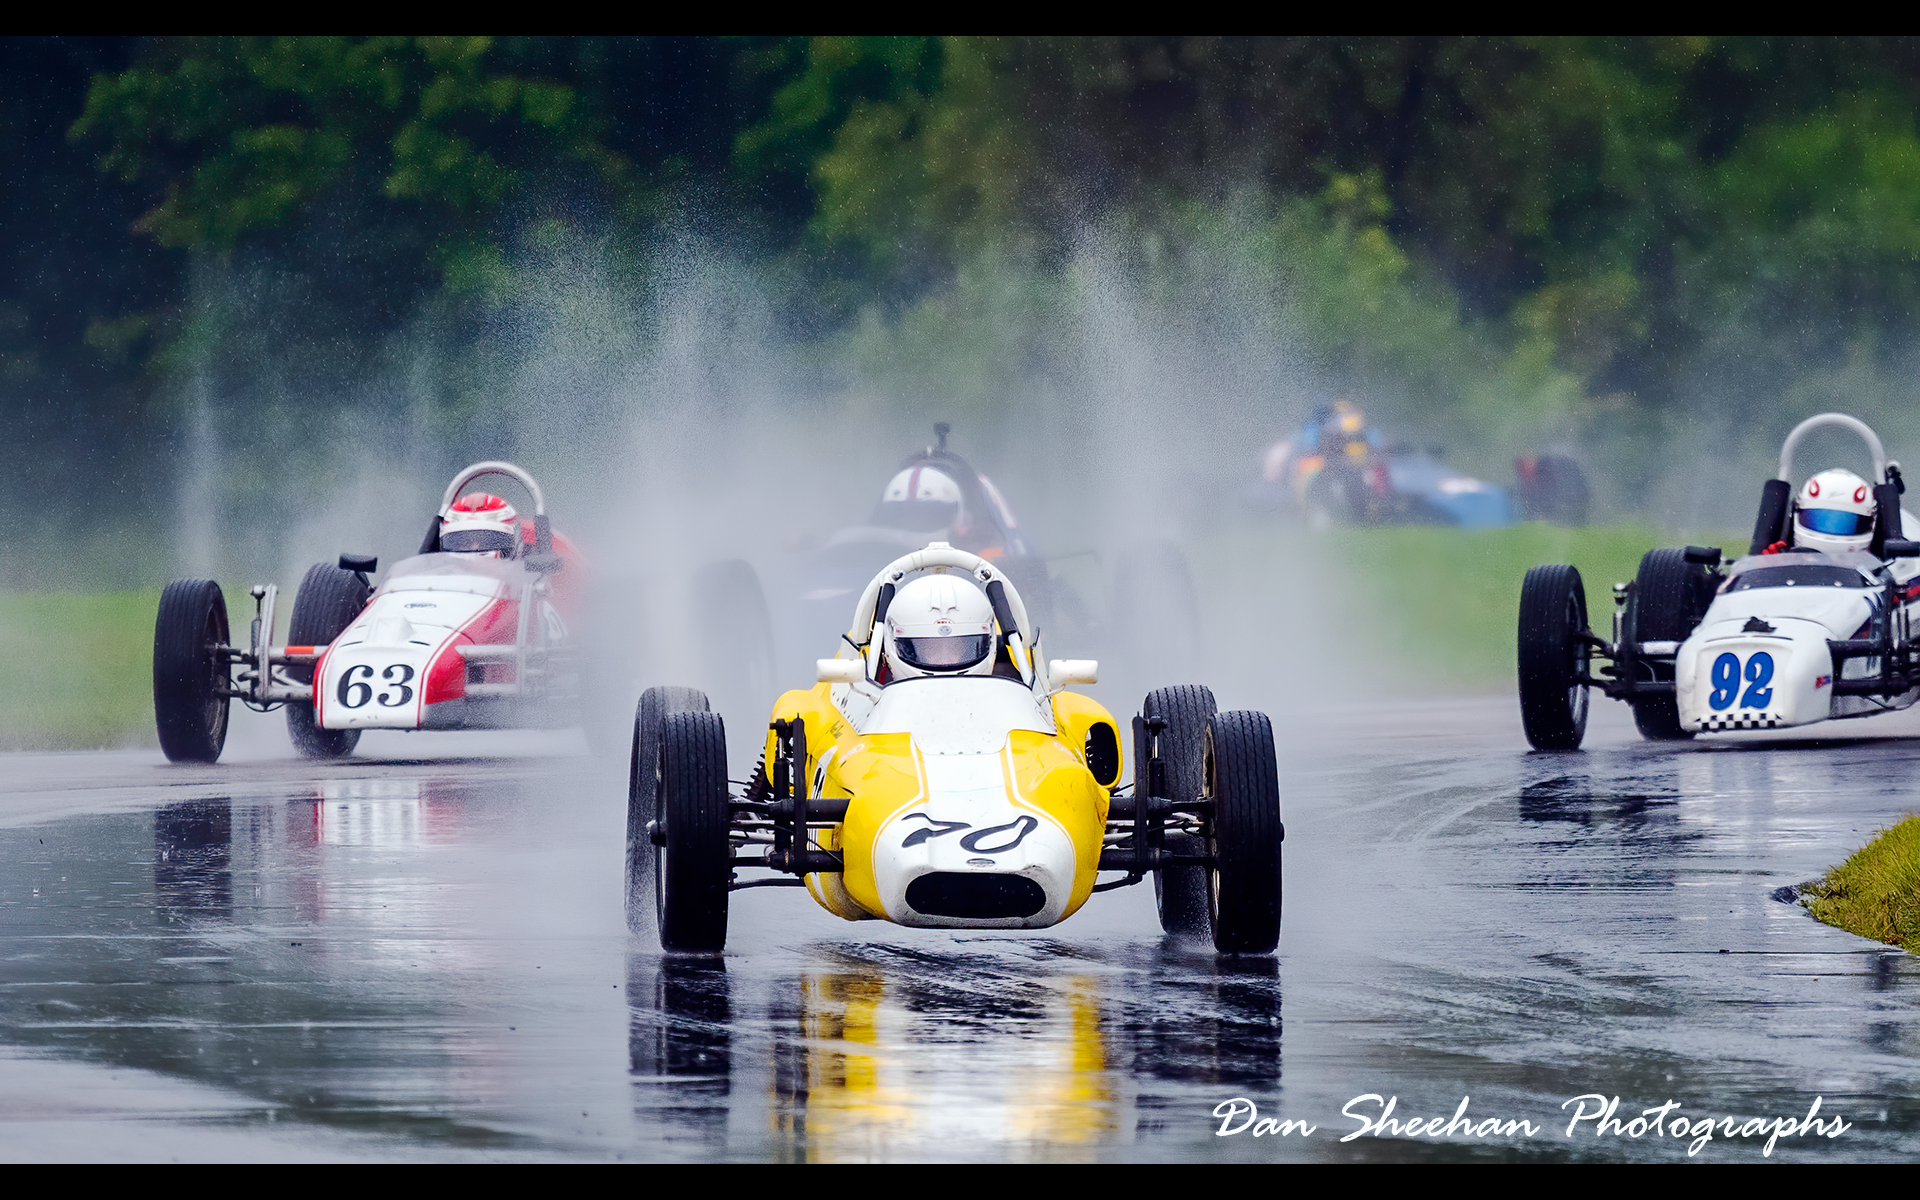 Rain Storm Road Racing.  : Cars : Dan Sheehan Photographs - Fine Art Stock Photography